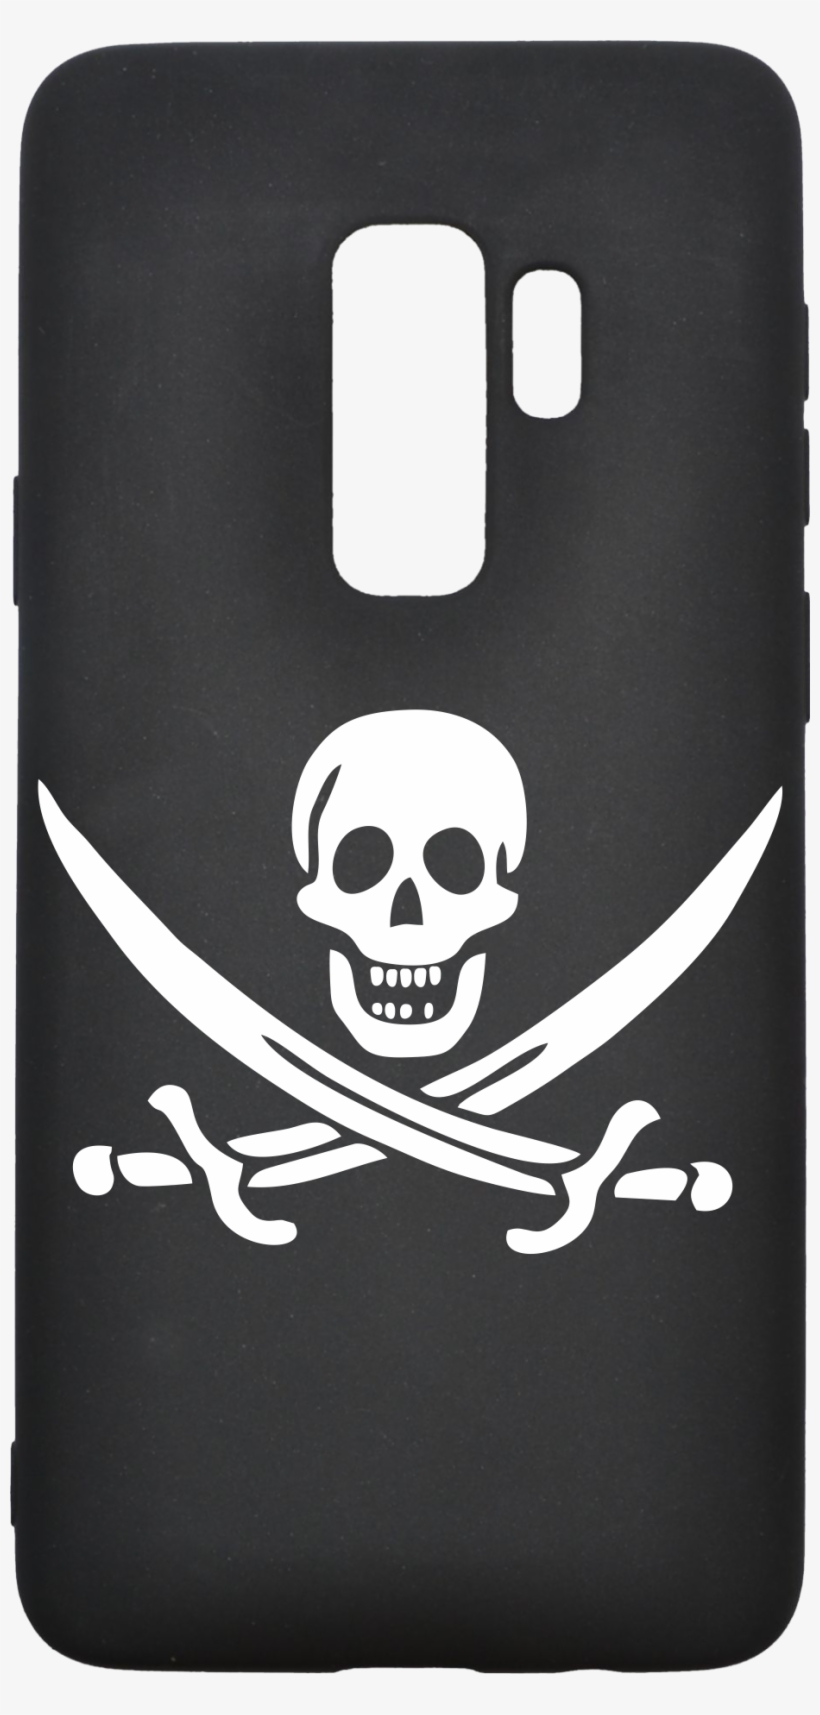 Jolly Roger - Blackbeard Pirate Flag, transparent png #9557816